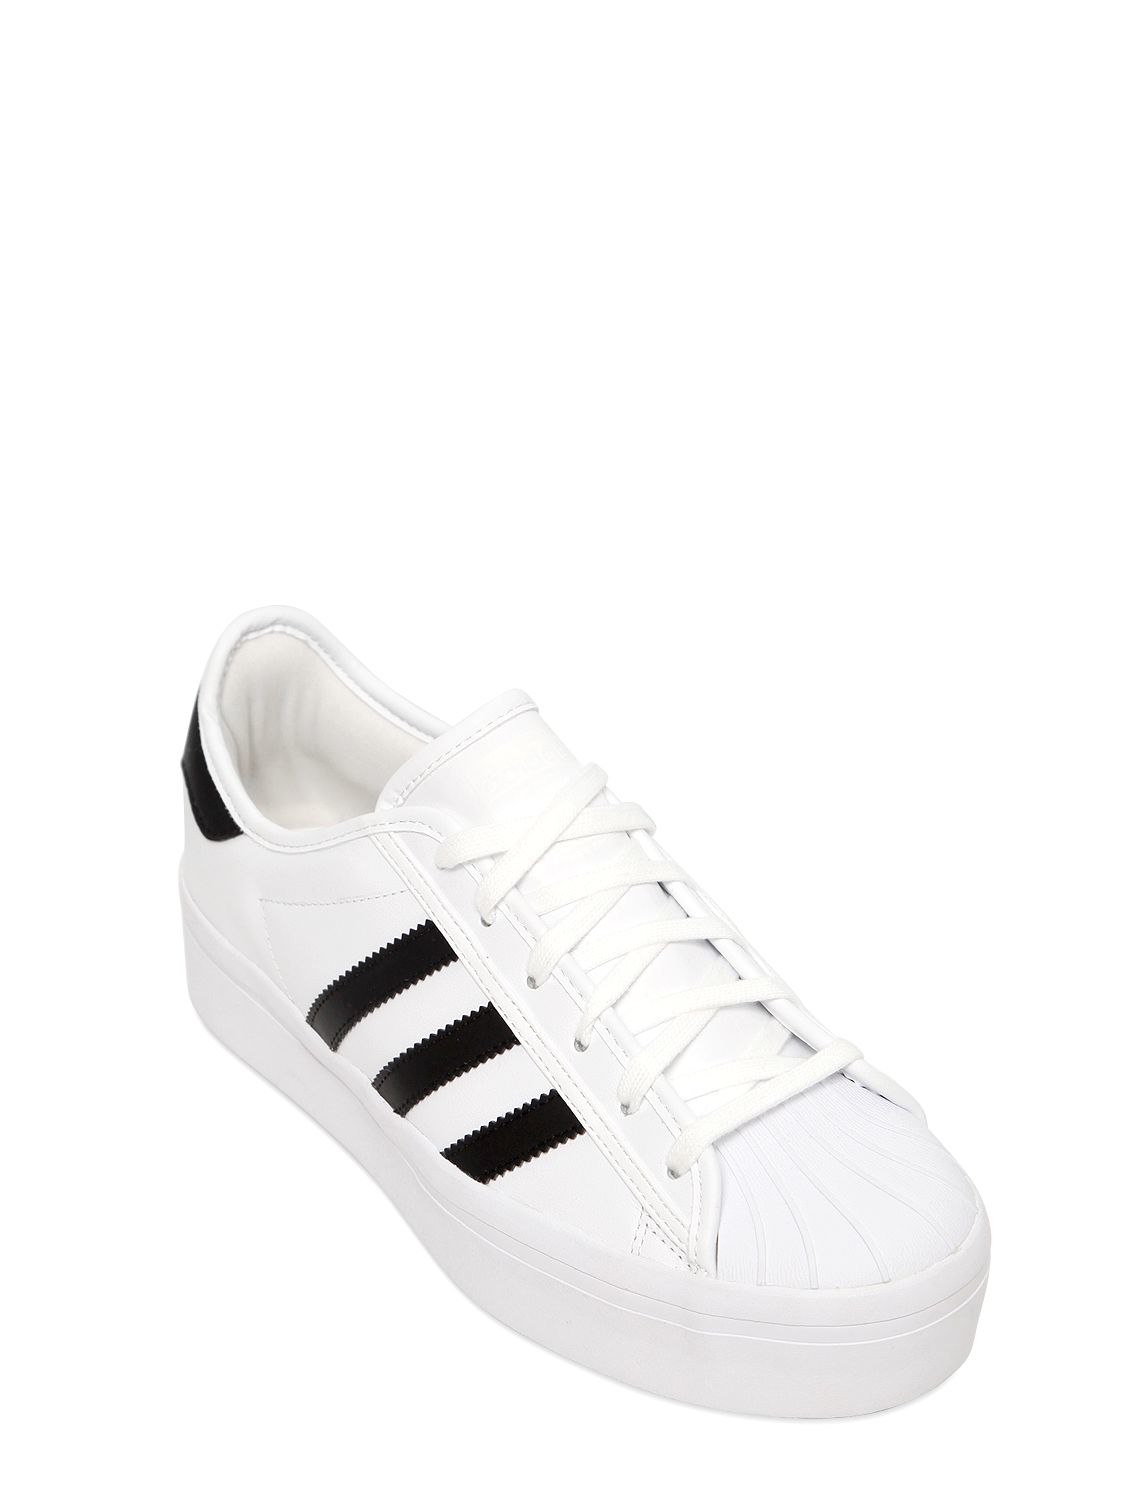 adidas Originals Superstar Platform Leather Sneakers in White/Black ...